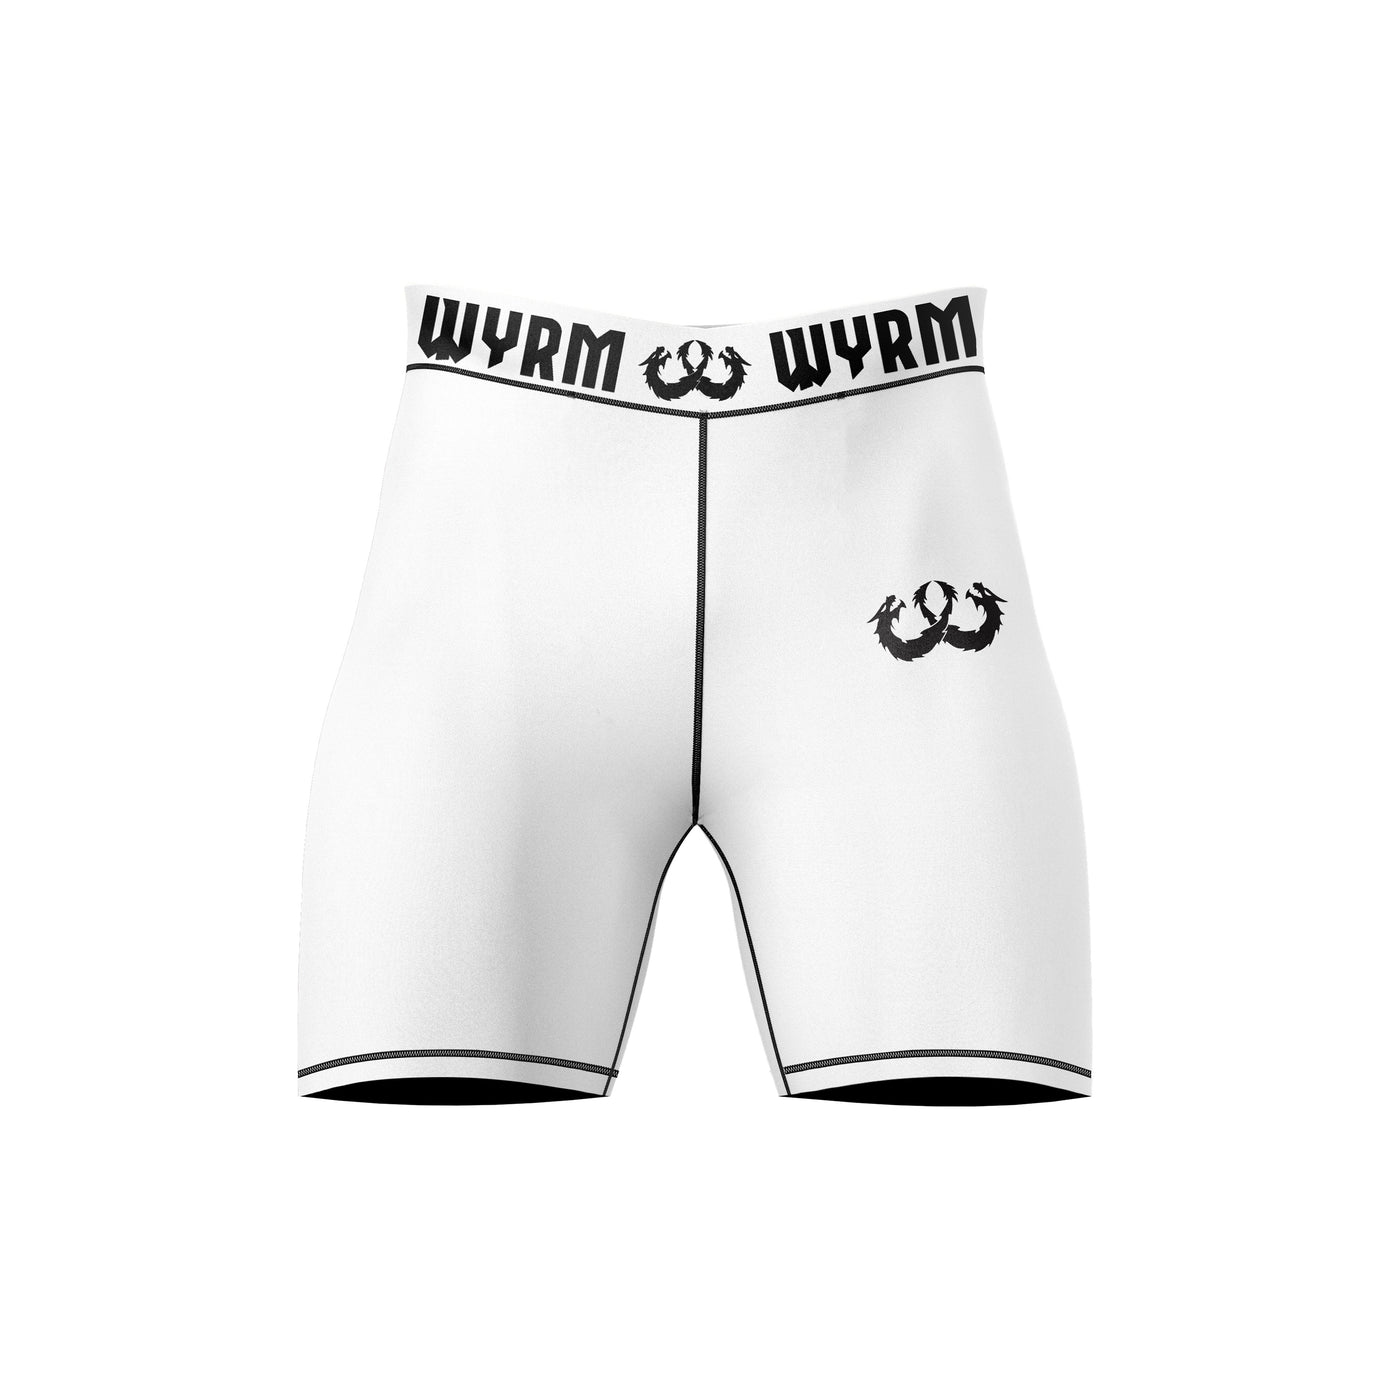 WYRM Basic White Compression Shorts